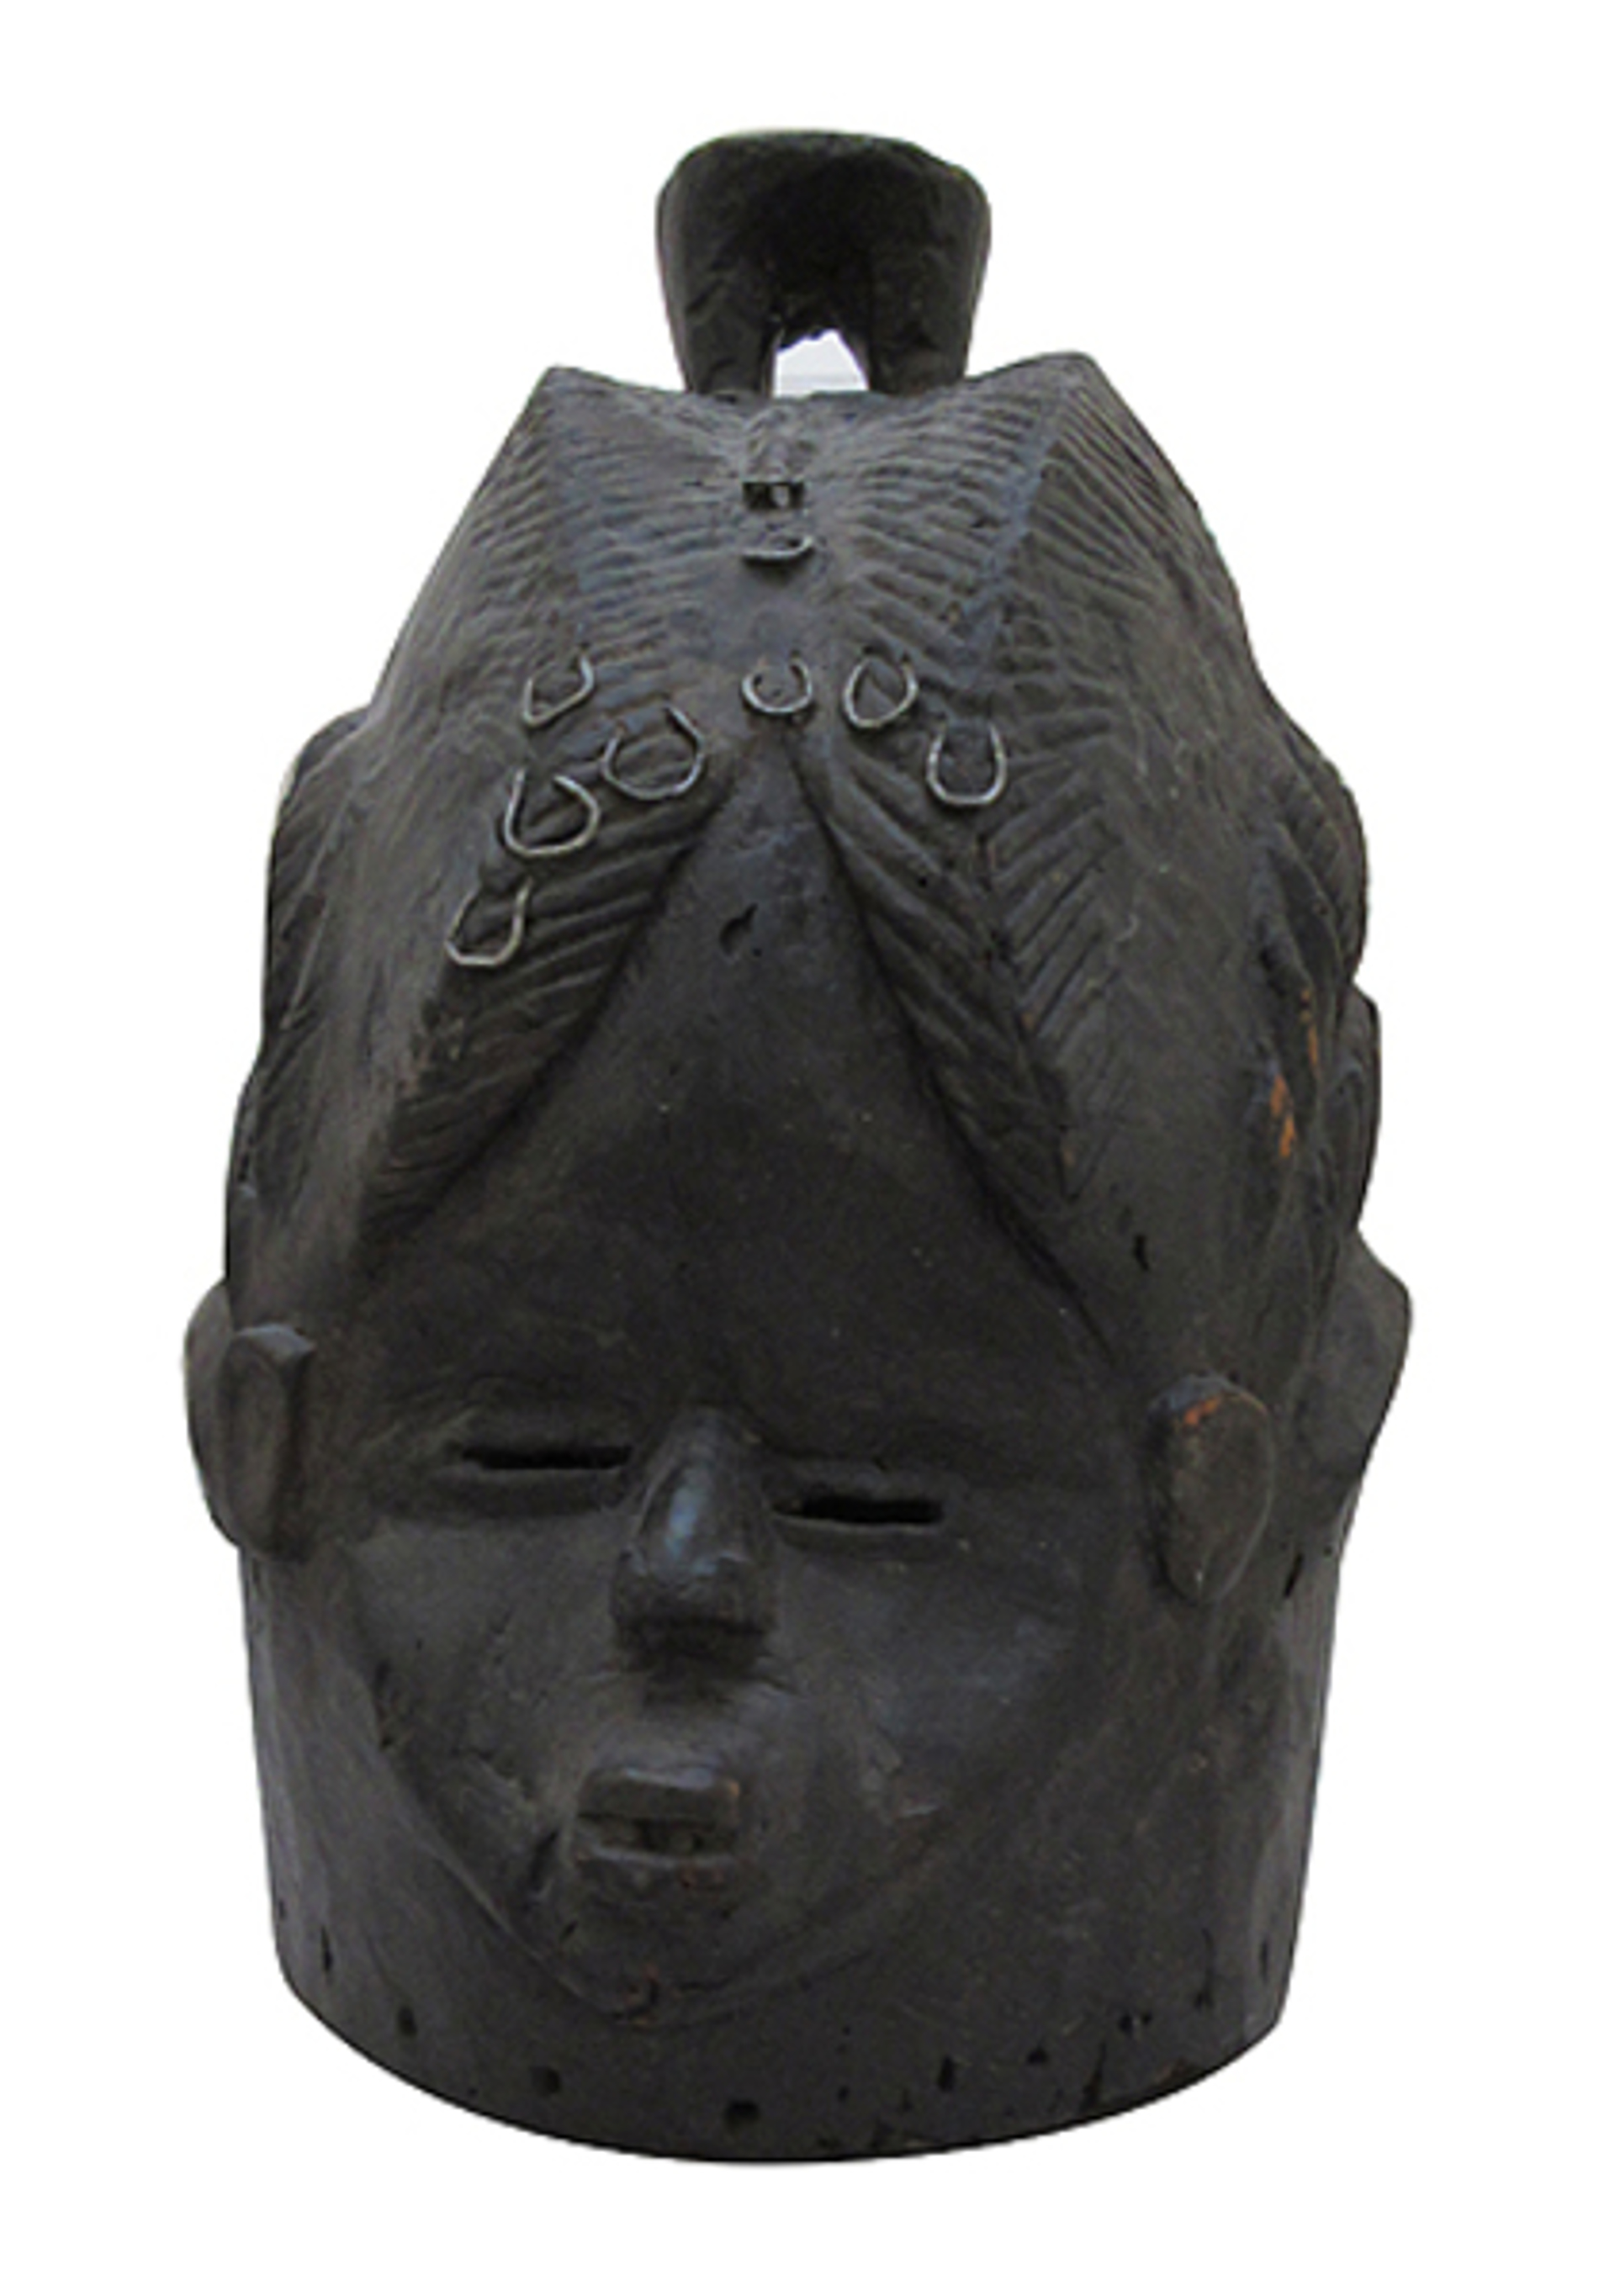 Secret Society Mask-Sierra Leone W. Africa, by African